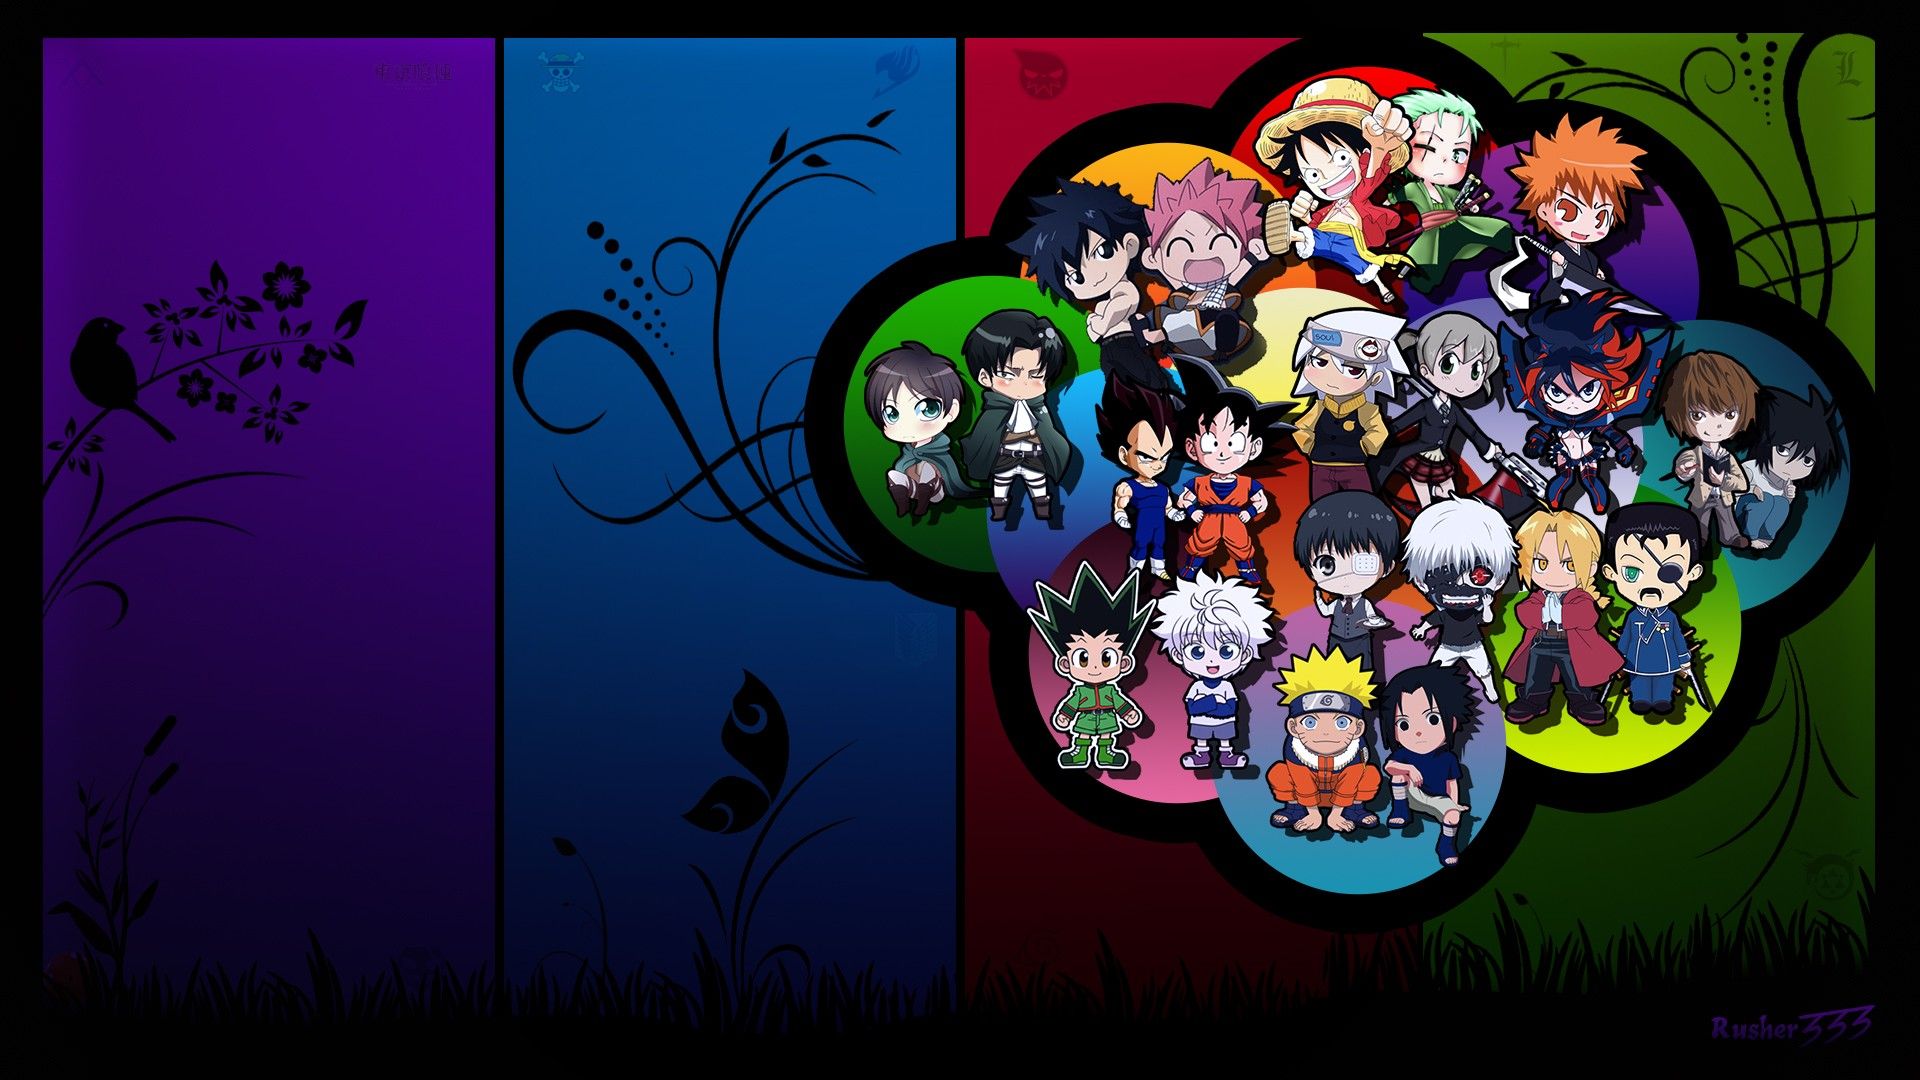 Download 1920x1080 Anime, Characters, One Piece, Hunter x Hunter, Shingeki no Kyojin, Fairy Tail, Bleach, Full Metal Alchemist, Death Note, Kill la Kill, Naruto wallpaper